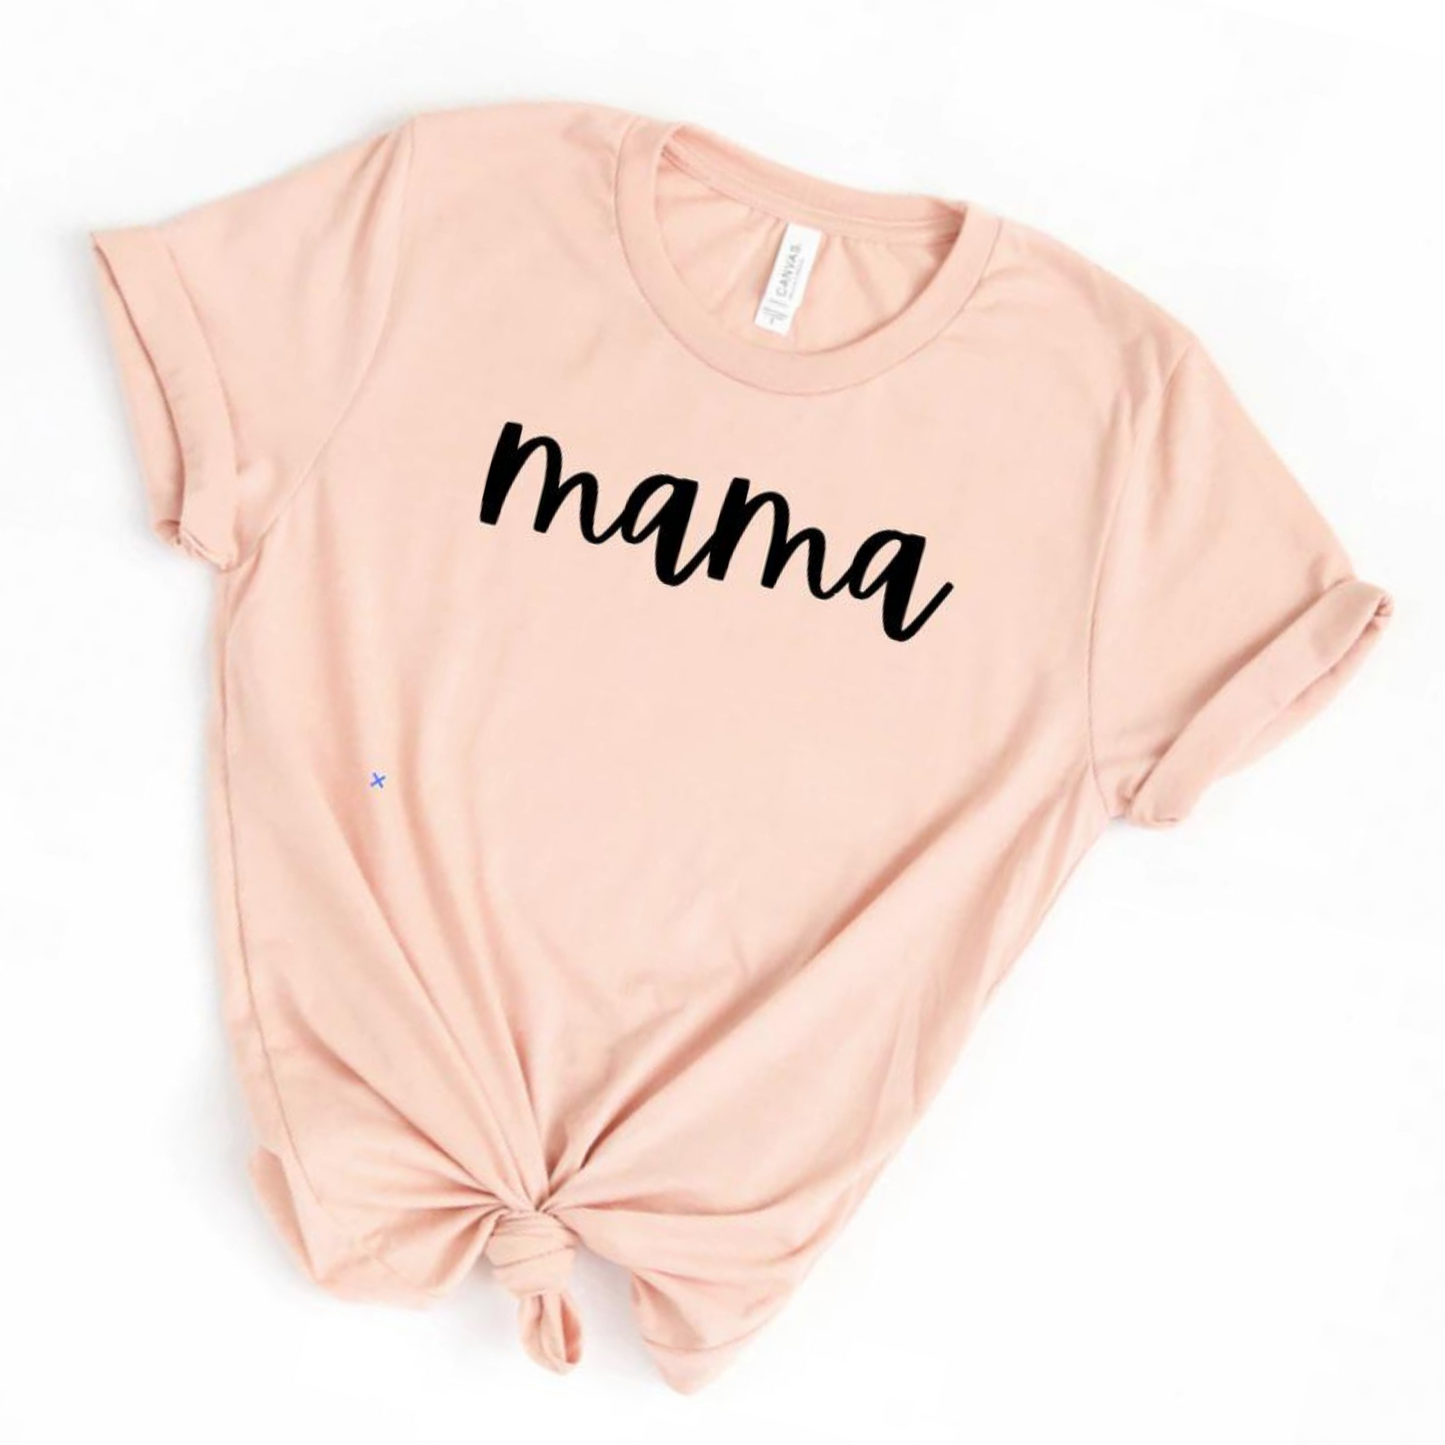 Mama Graphic Tee, Pink